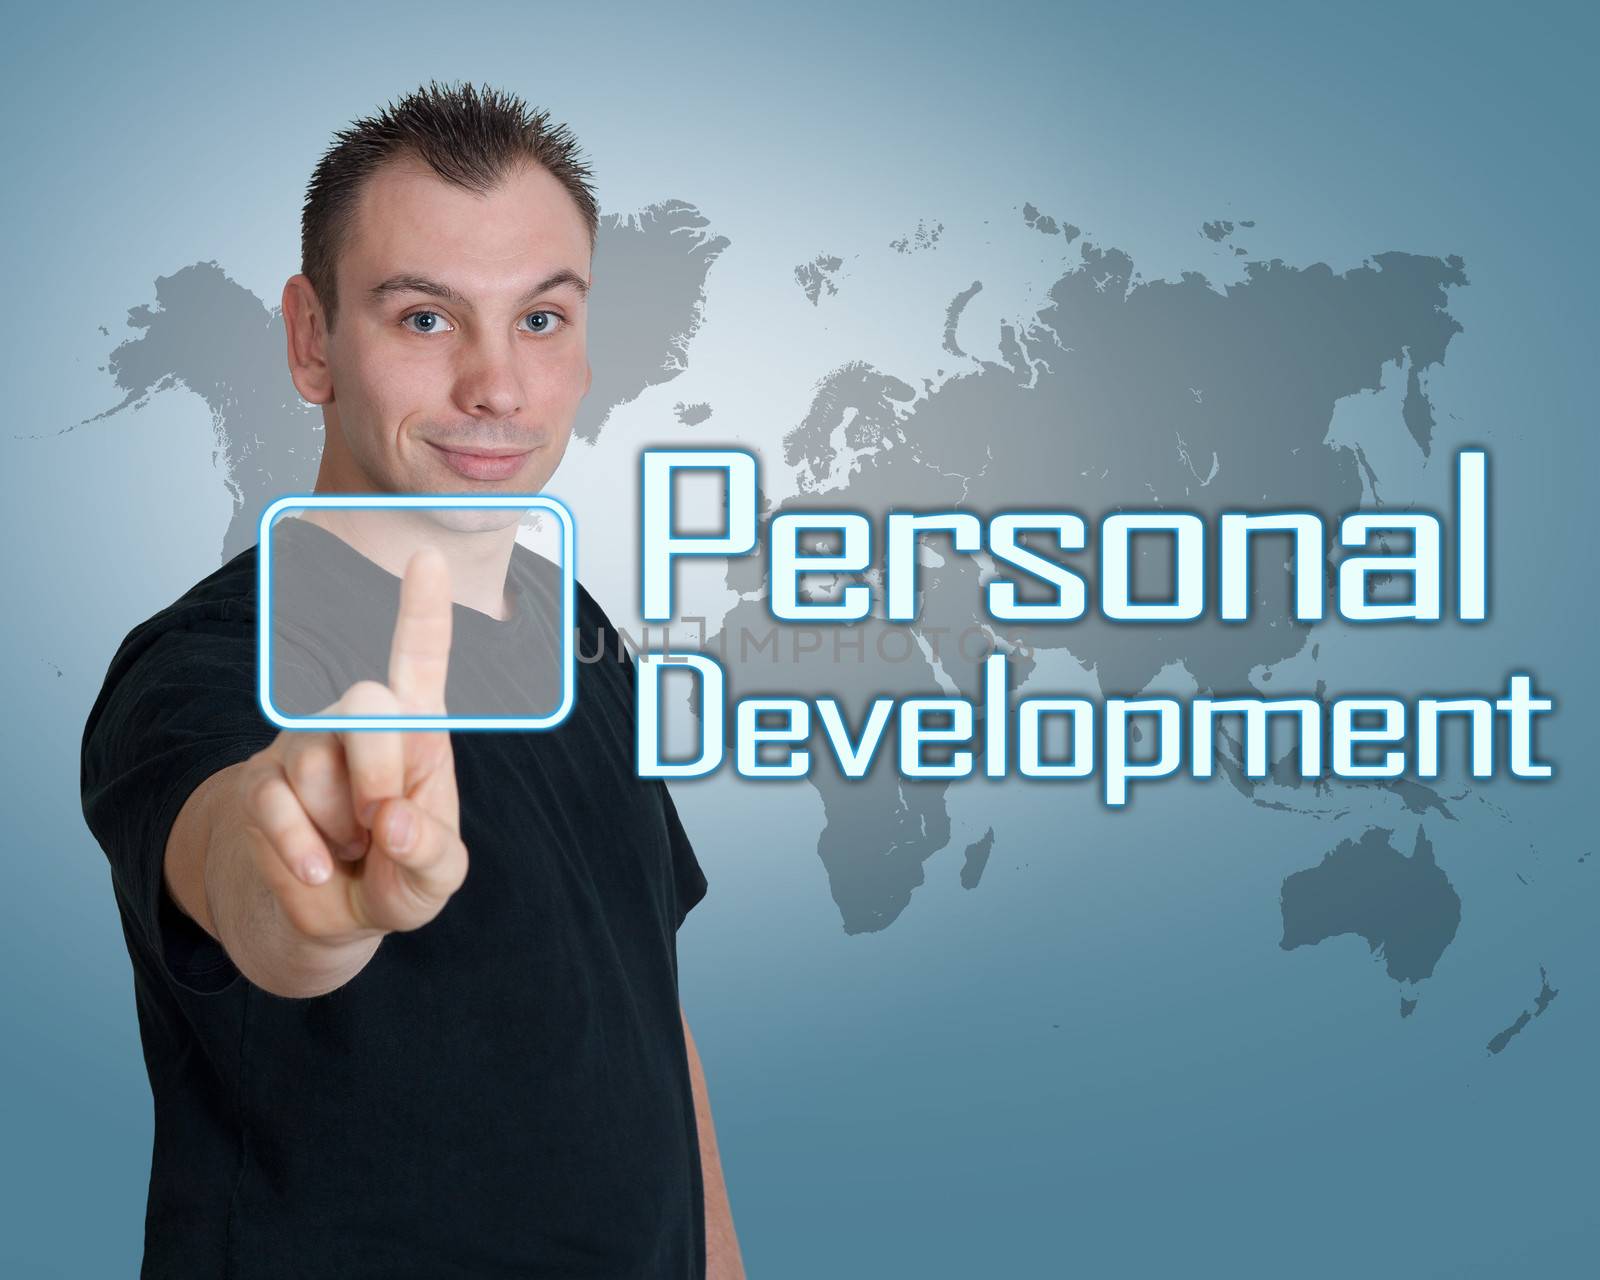 Personal Development by Mazirama